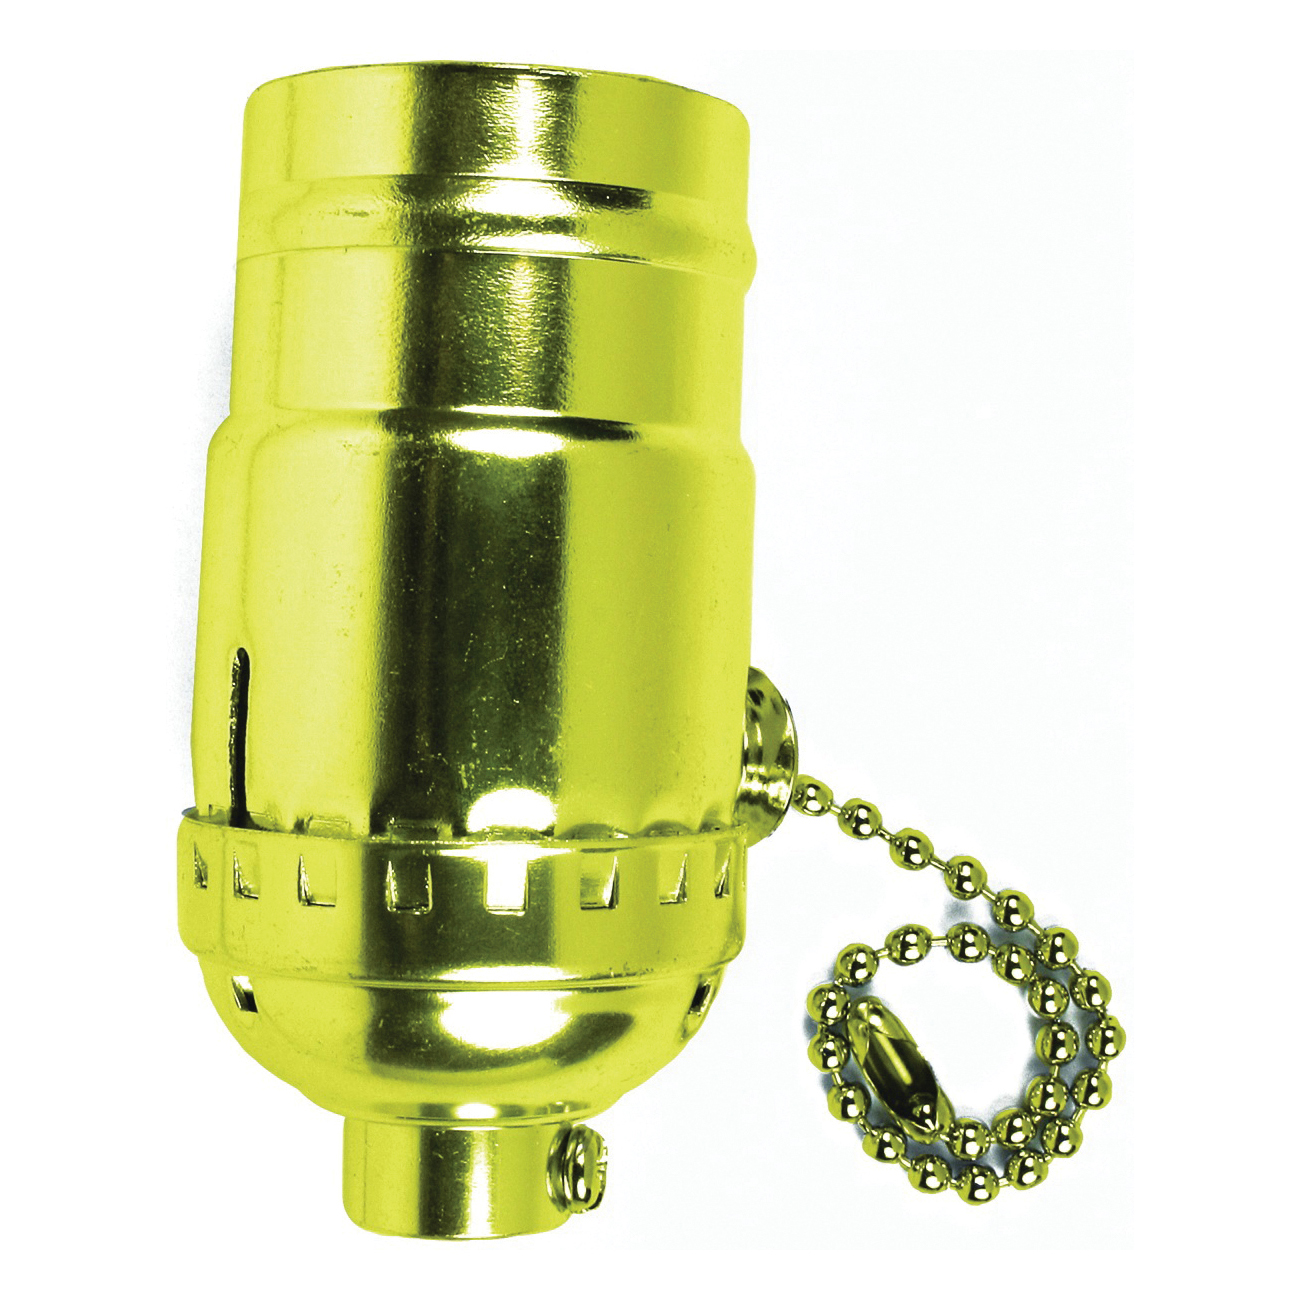 60410 Pull Chain Lamp Socket, 250 V, 250 W, Brass Housing Material, Yellow